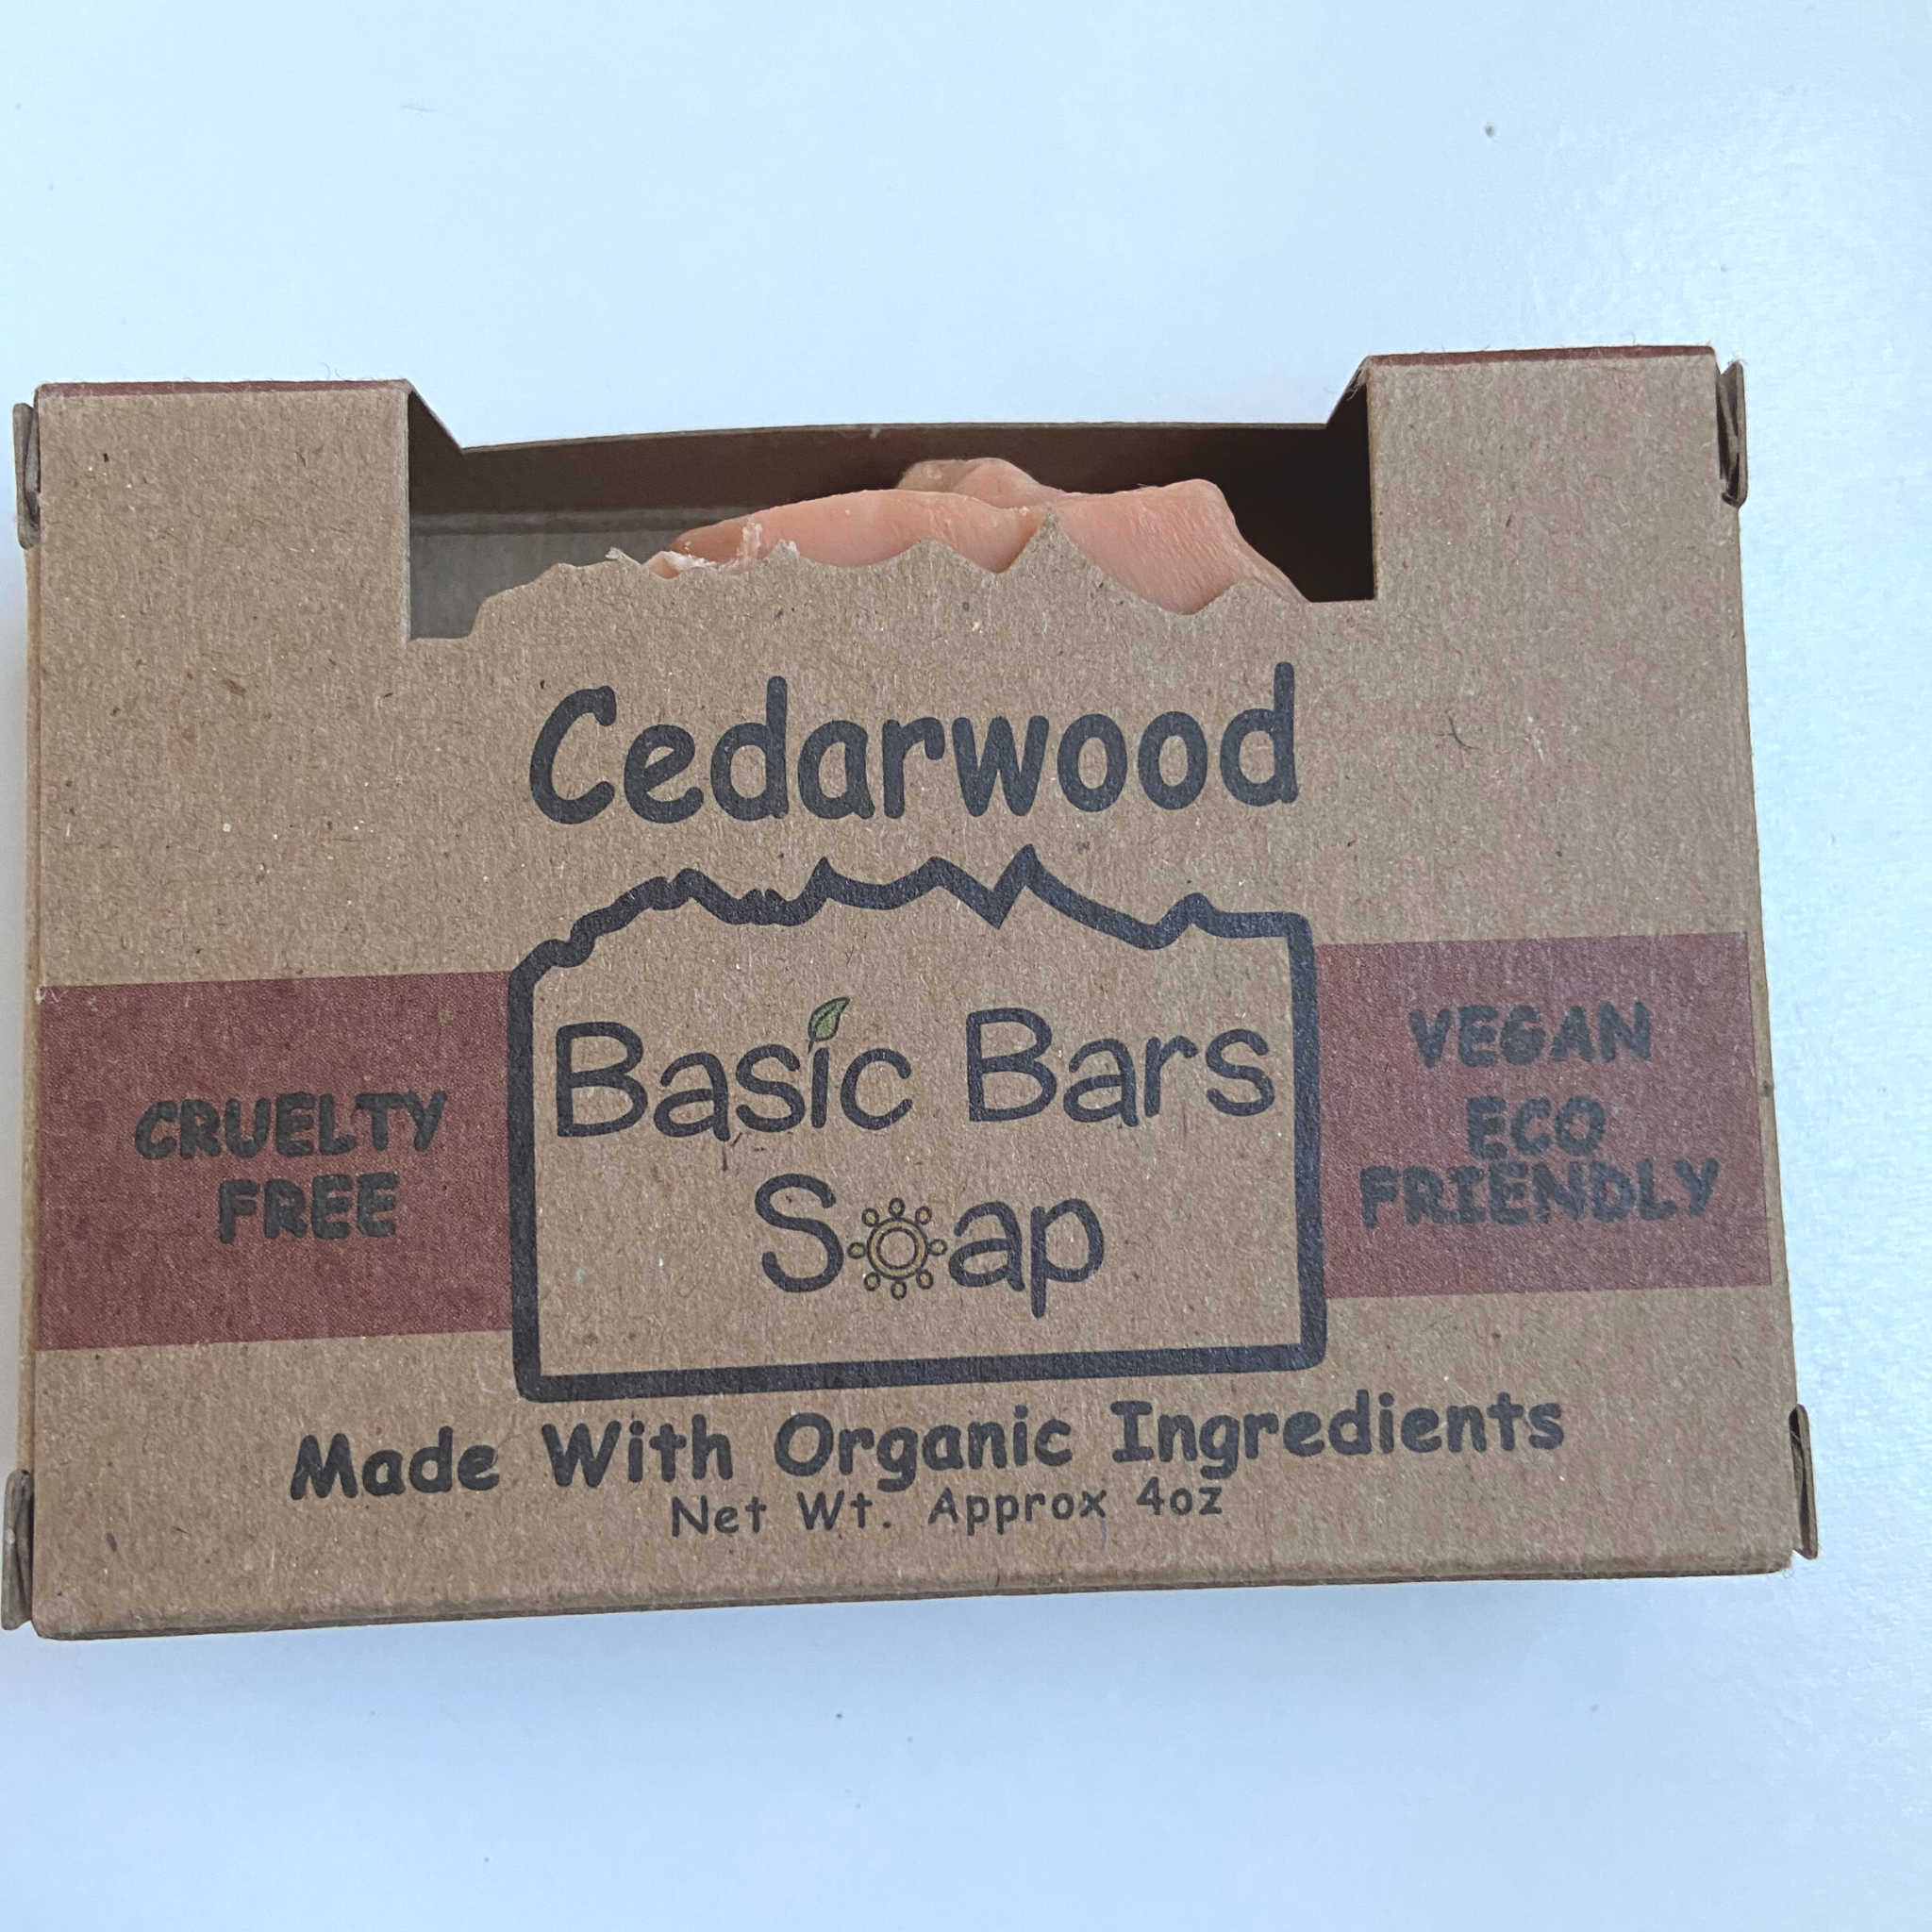 Basic Bars Soap Cedarwood